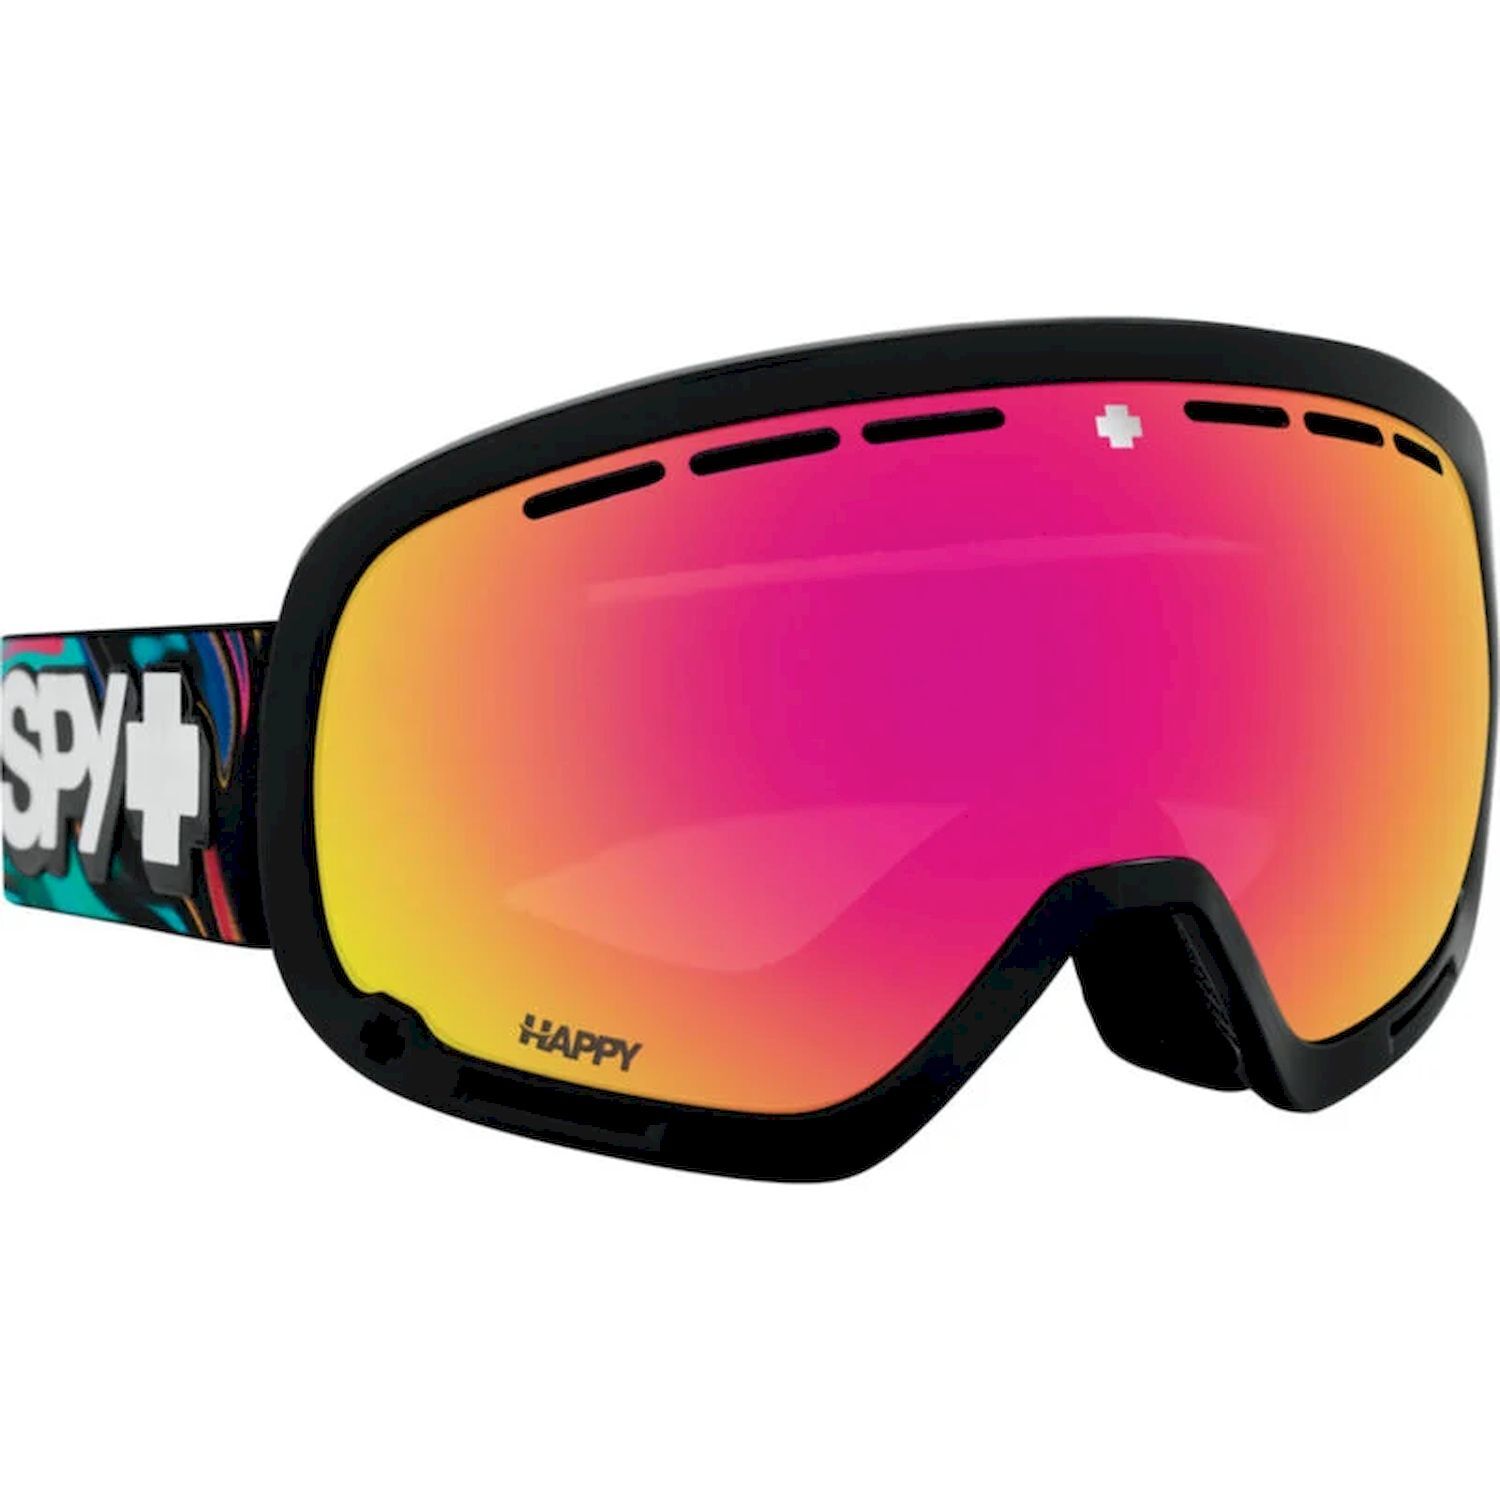 Spy Marshall - Ski goggles